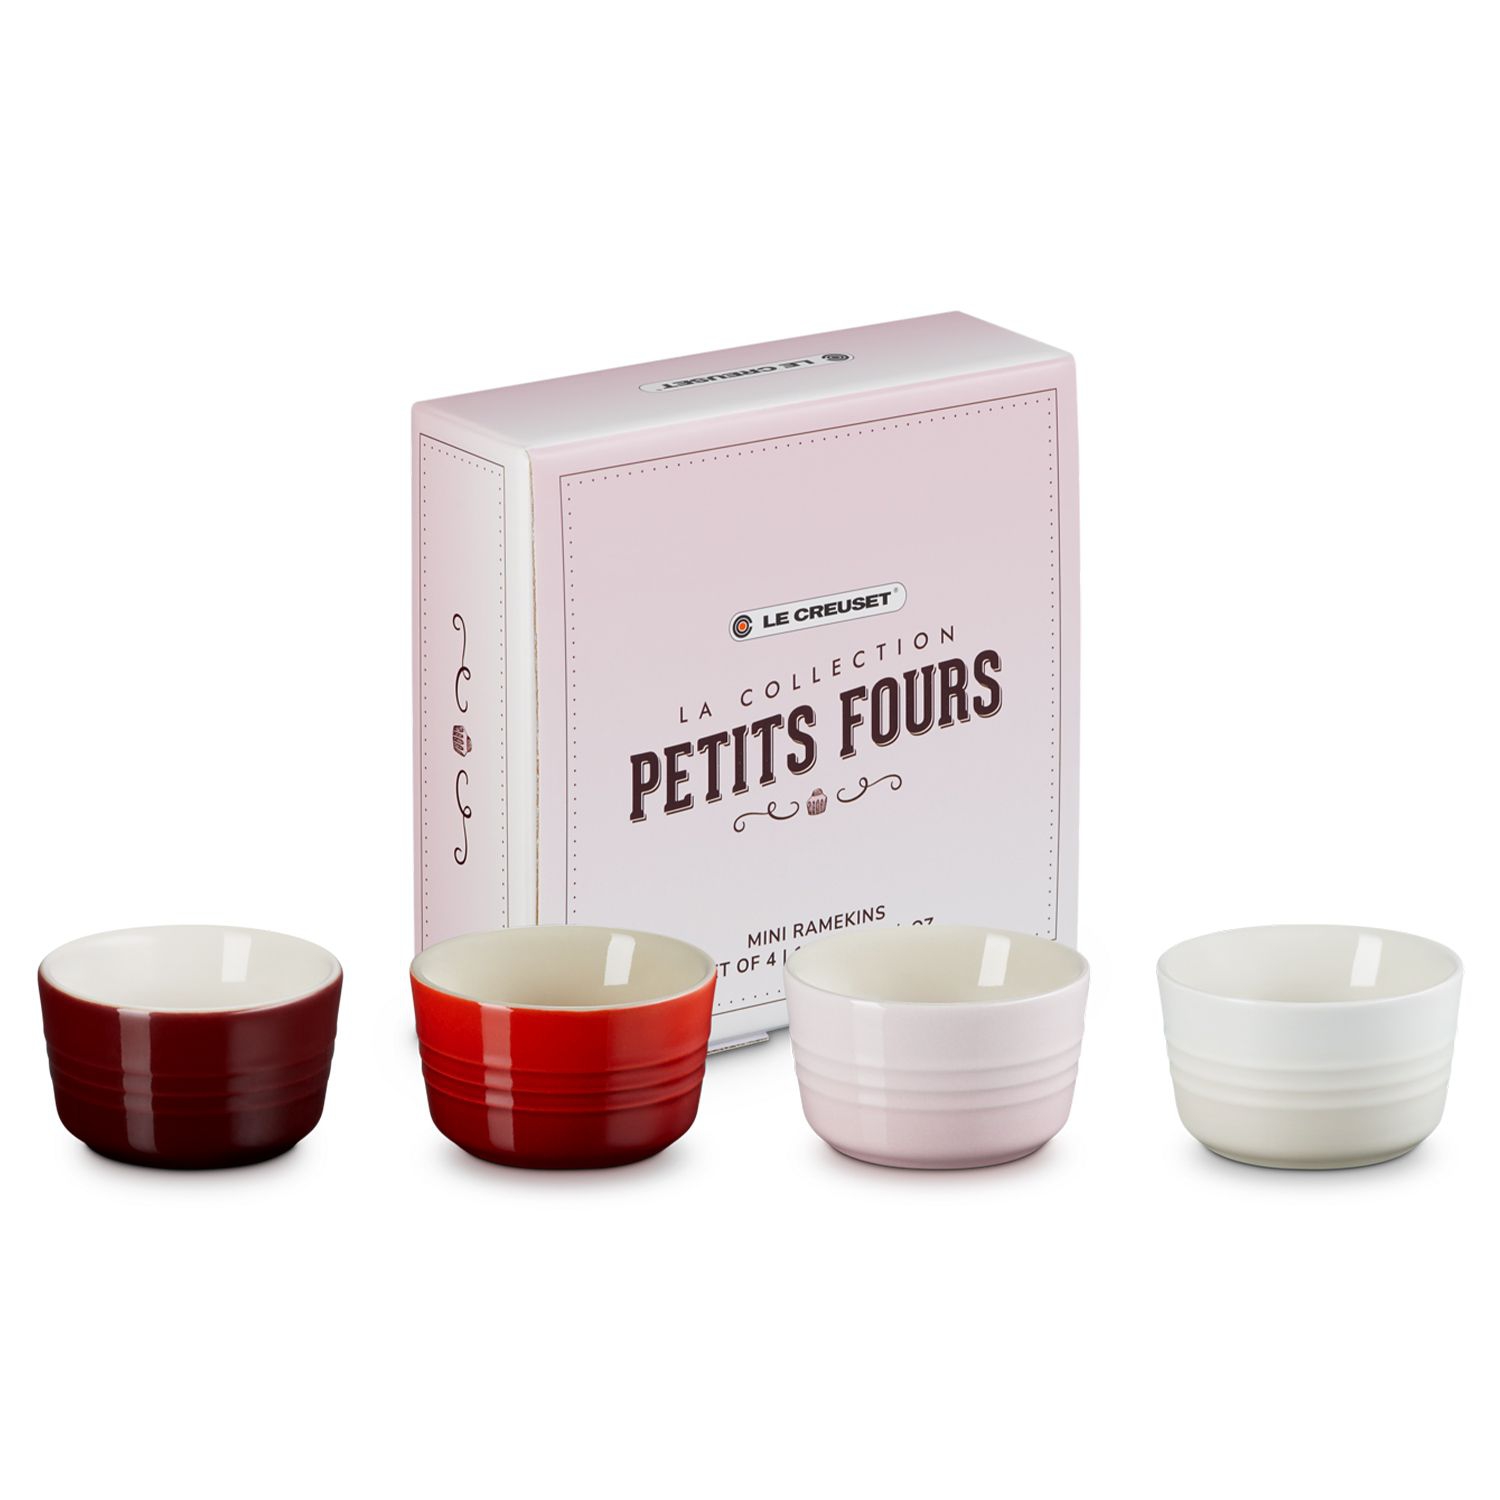 Le Creuset - Set of 4 Mini Ramekins - Petits Fours